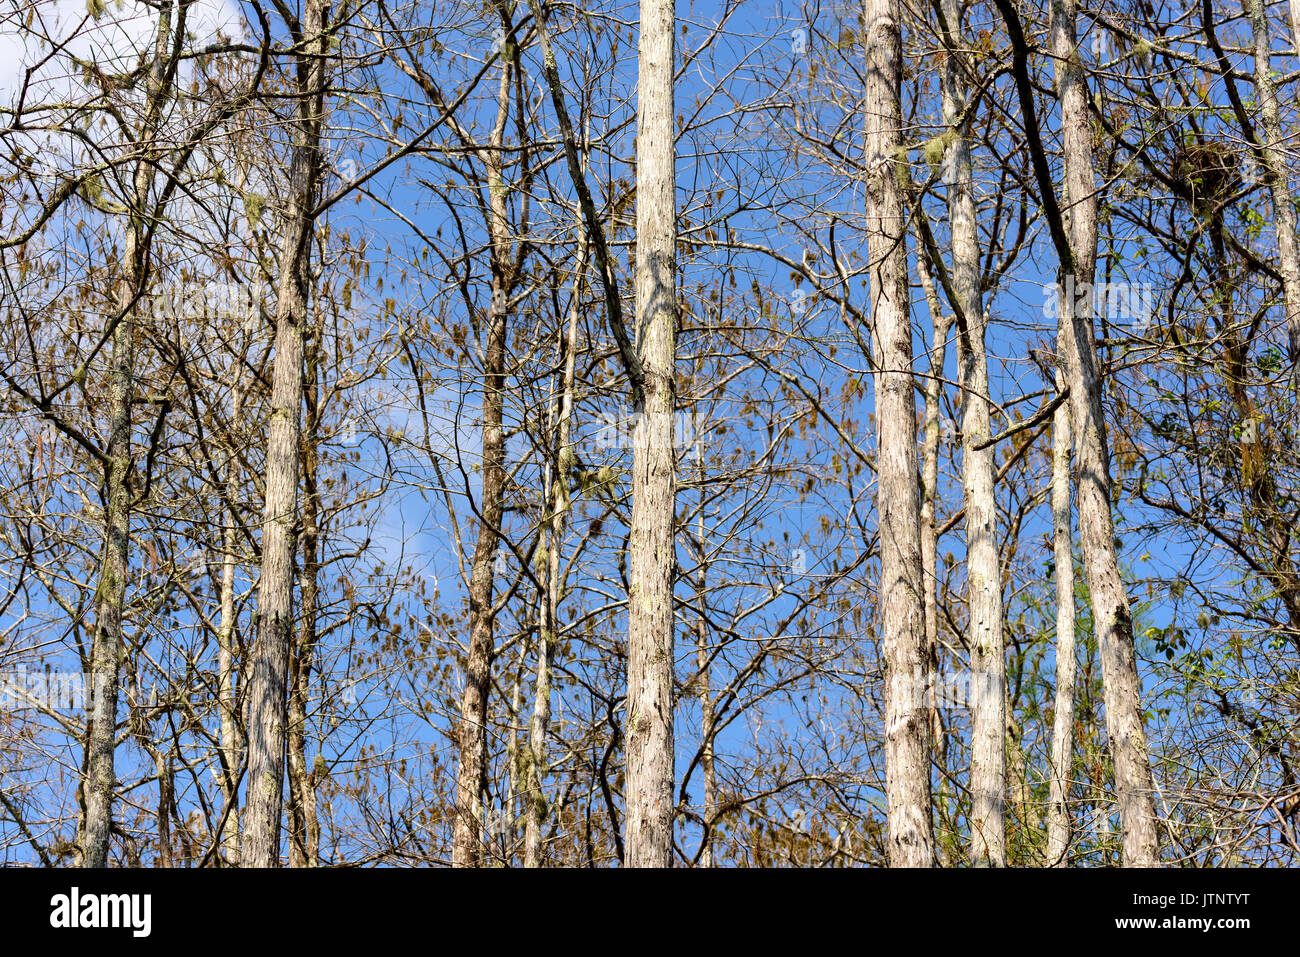 Pond cypress trees, Corkscrew Swamp Sanctuary, Florida, USA Stock Photo